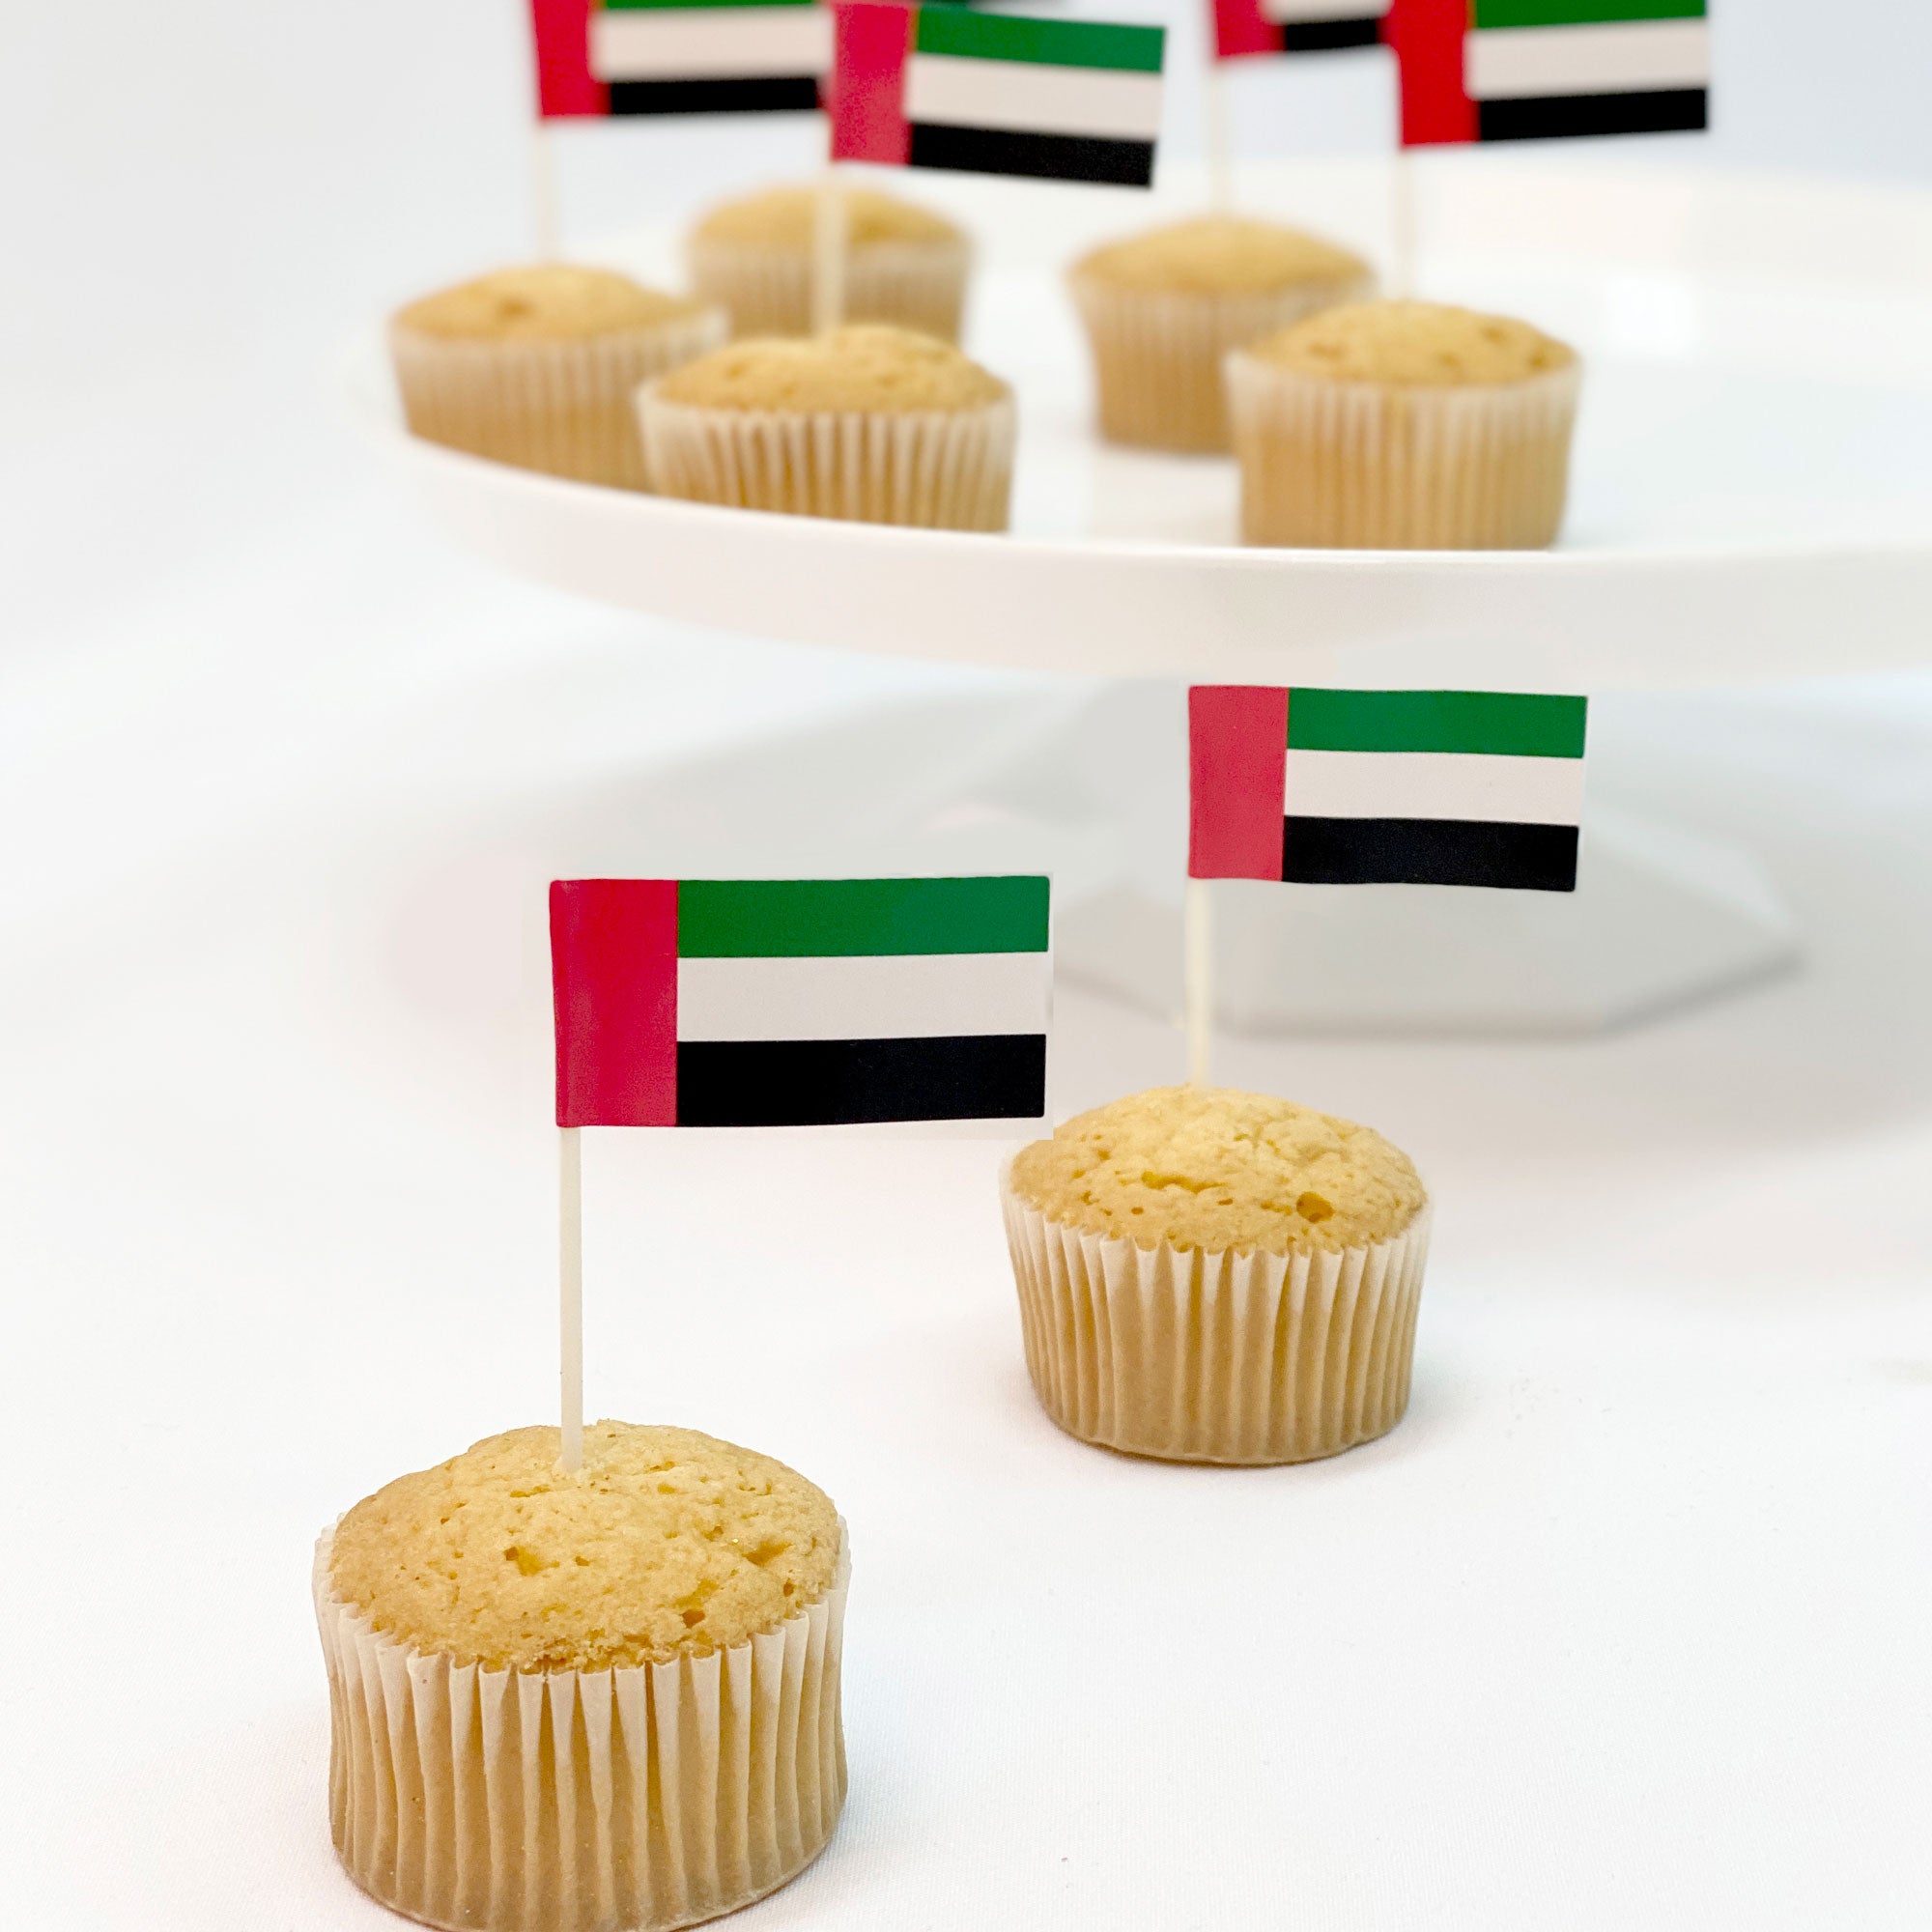 UAE Flag Picks Plastic & Paper 30pcs